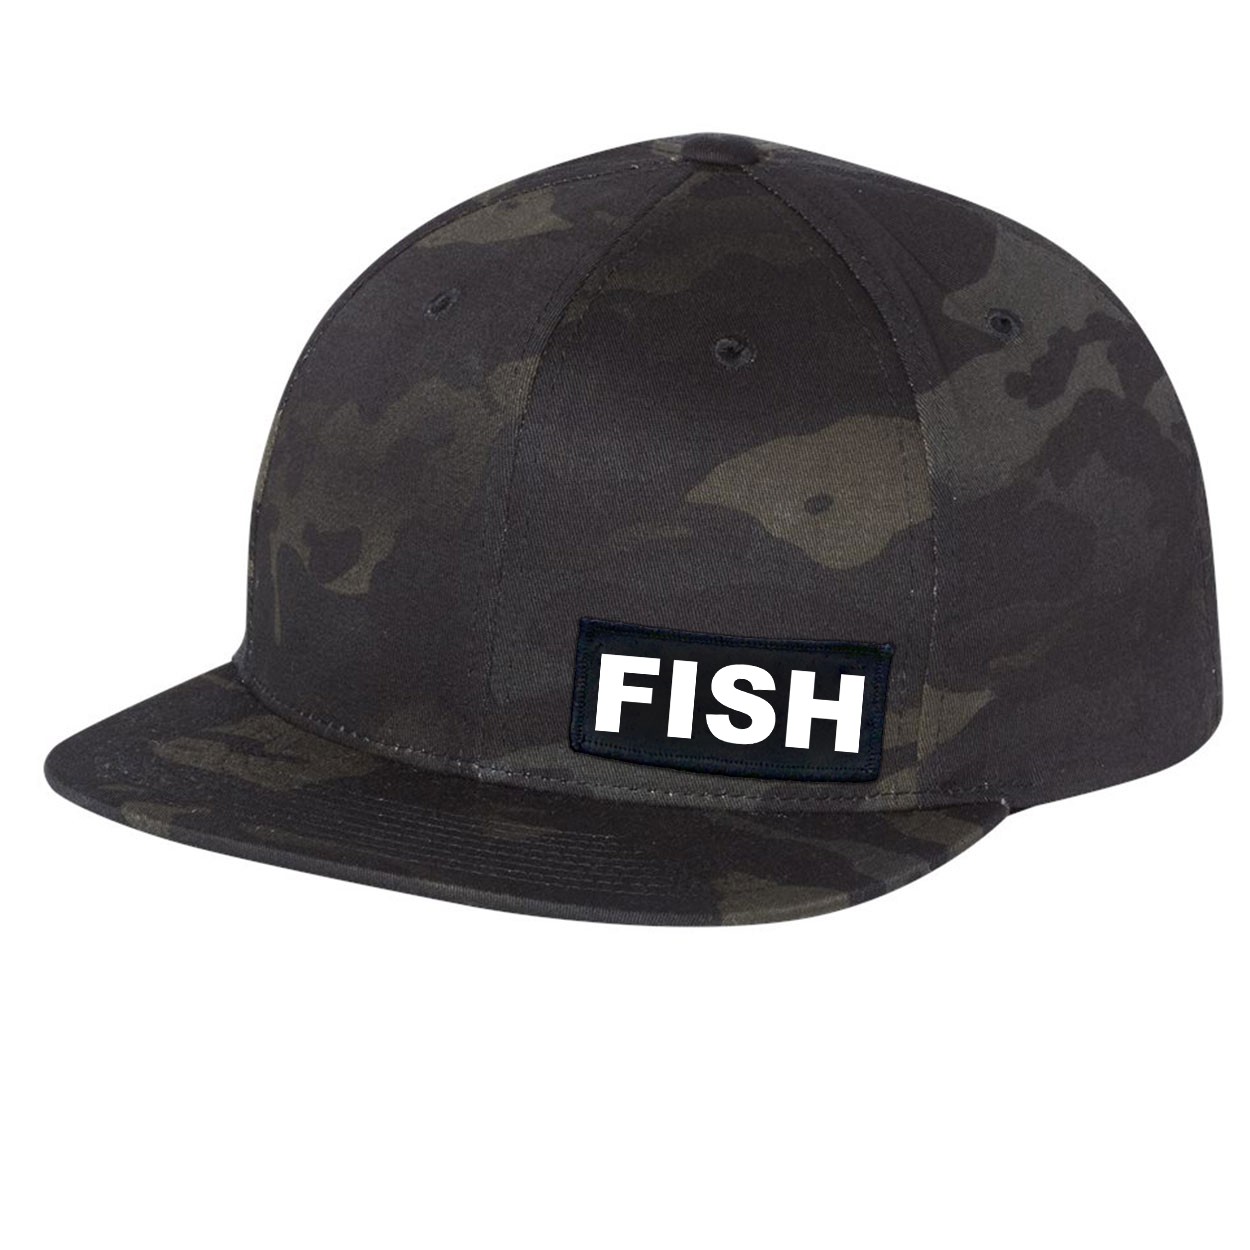 Fish Brand Logo Night Out Woven Patch Flat Brim Snapback Hat Black Camo (White Logo)